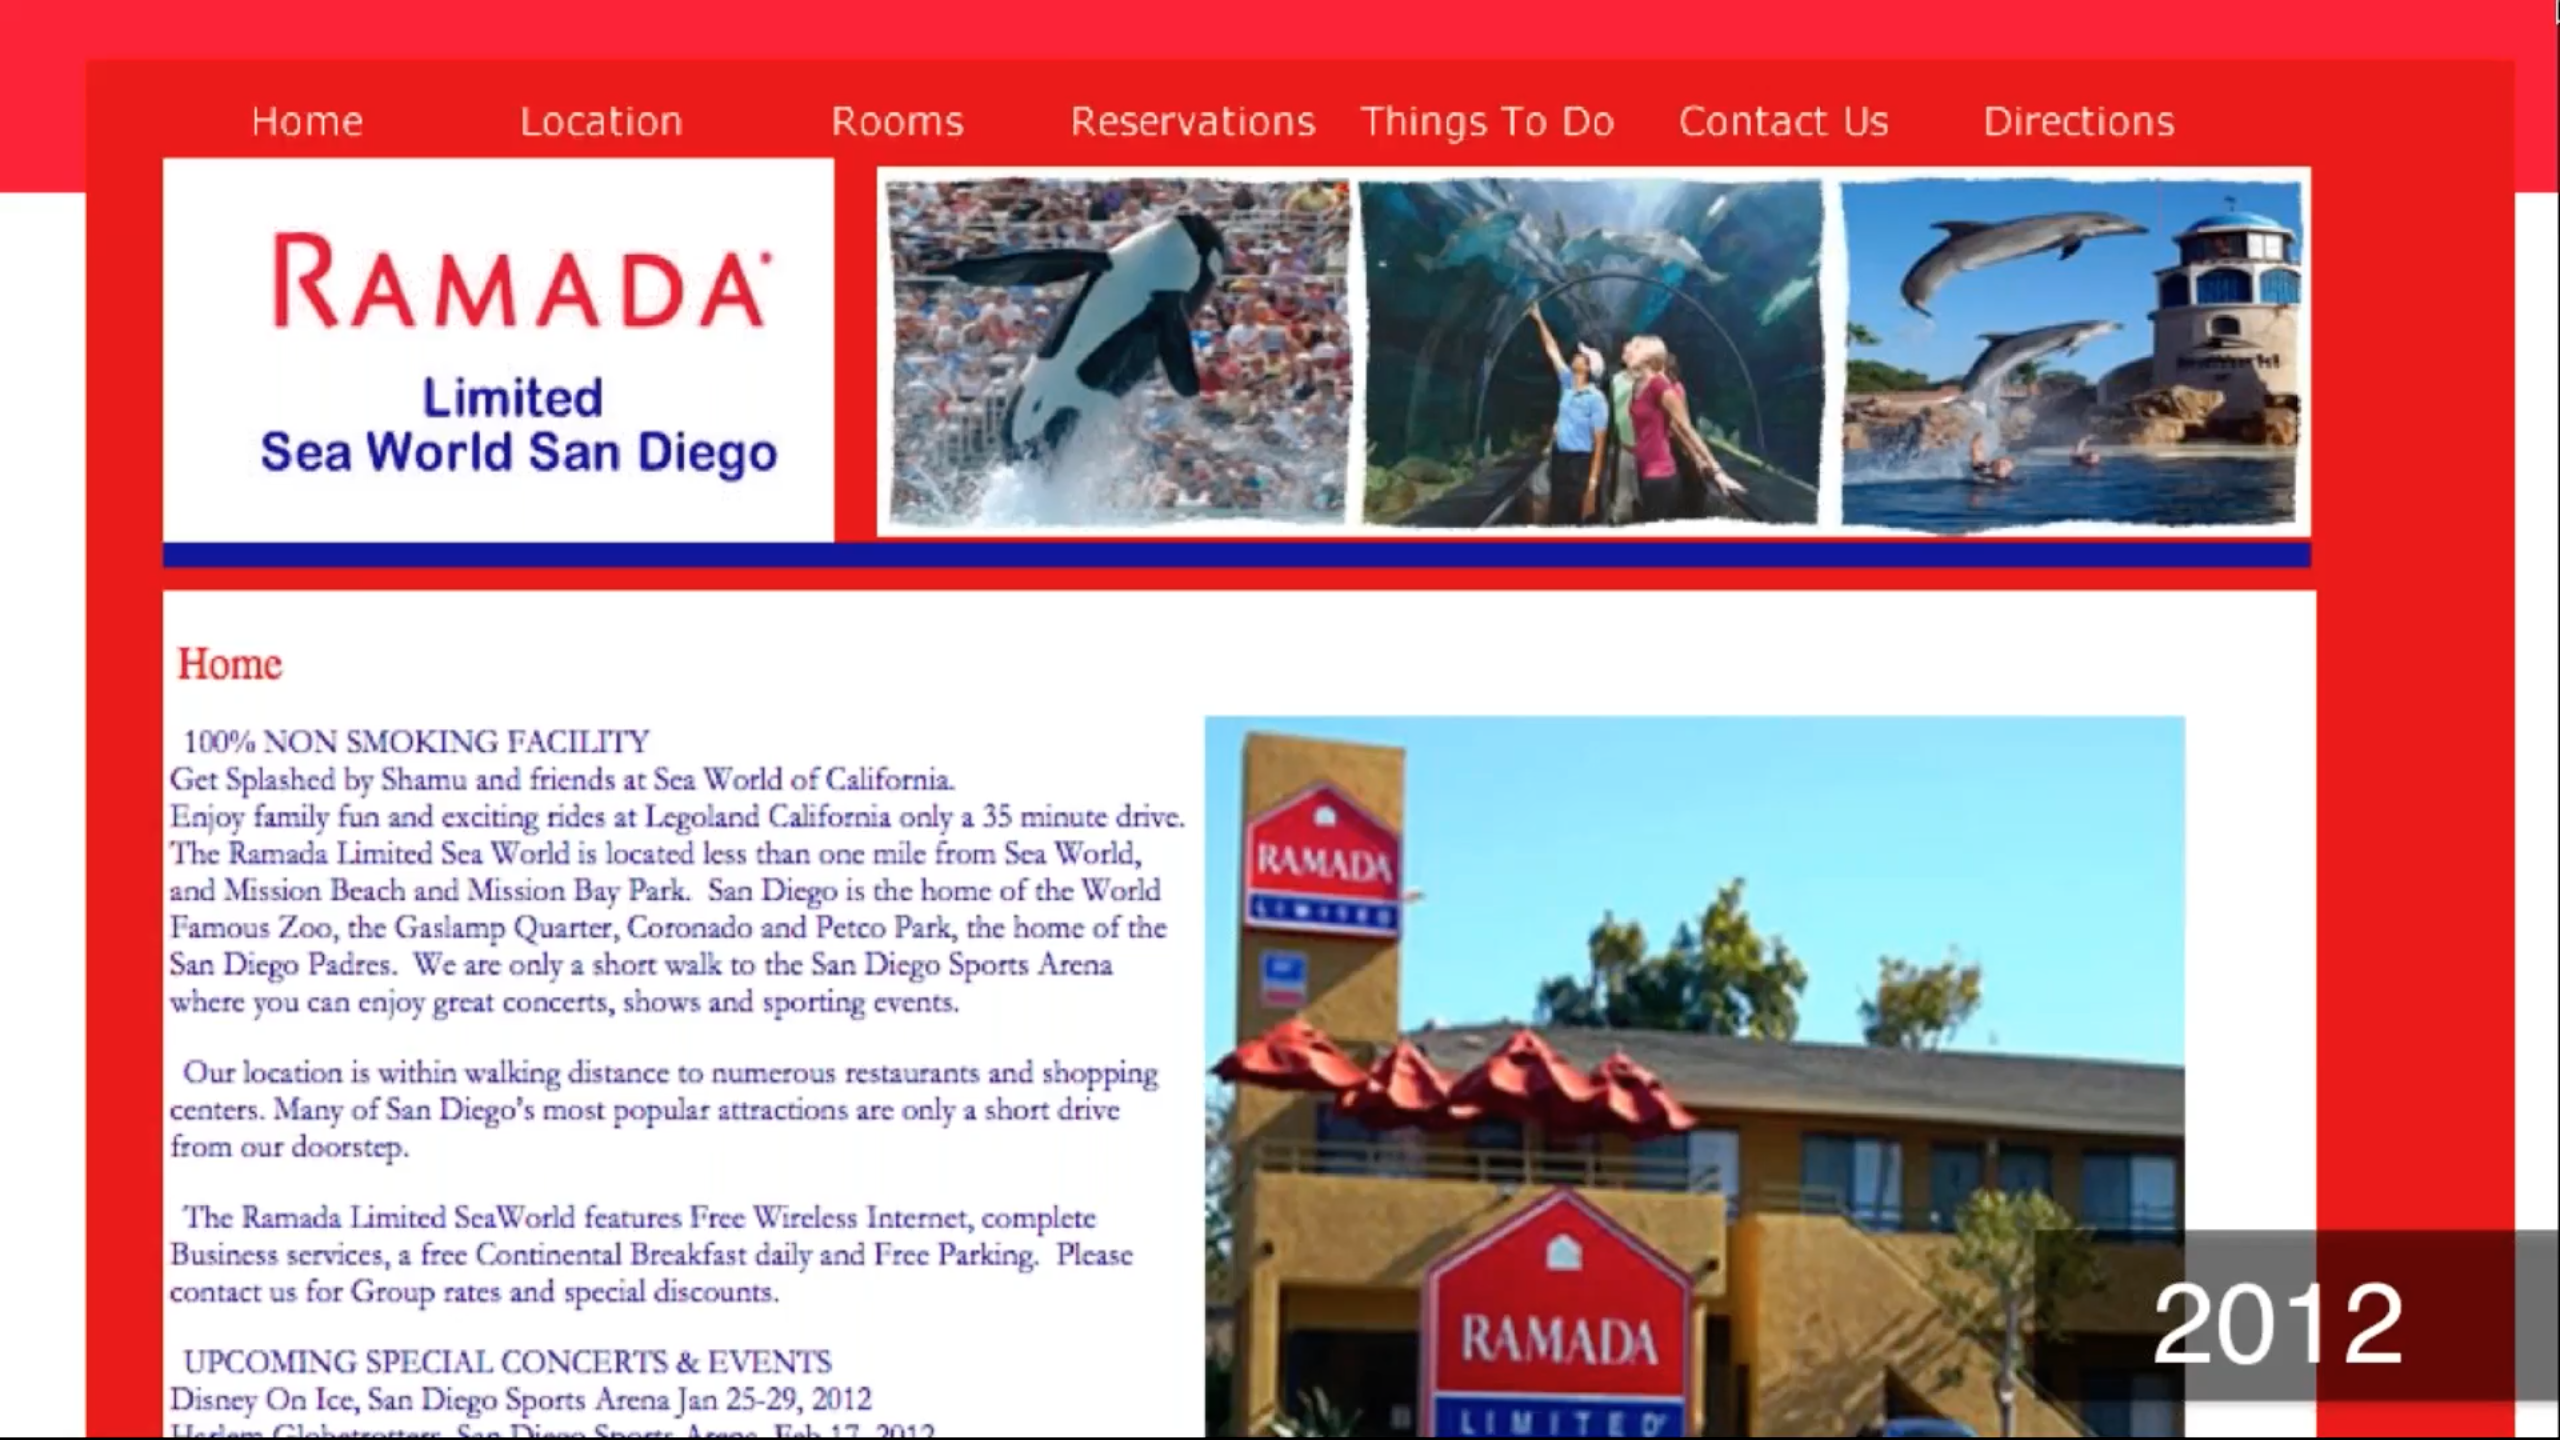 Hotel Website Example 2012